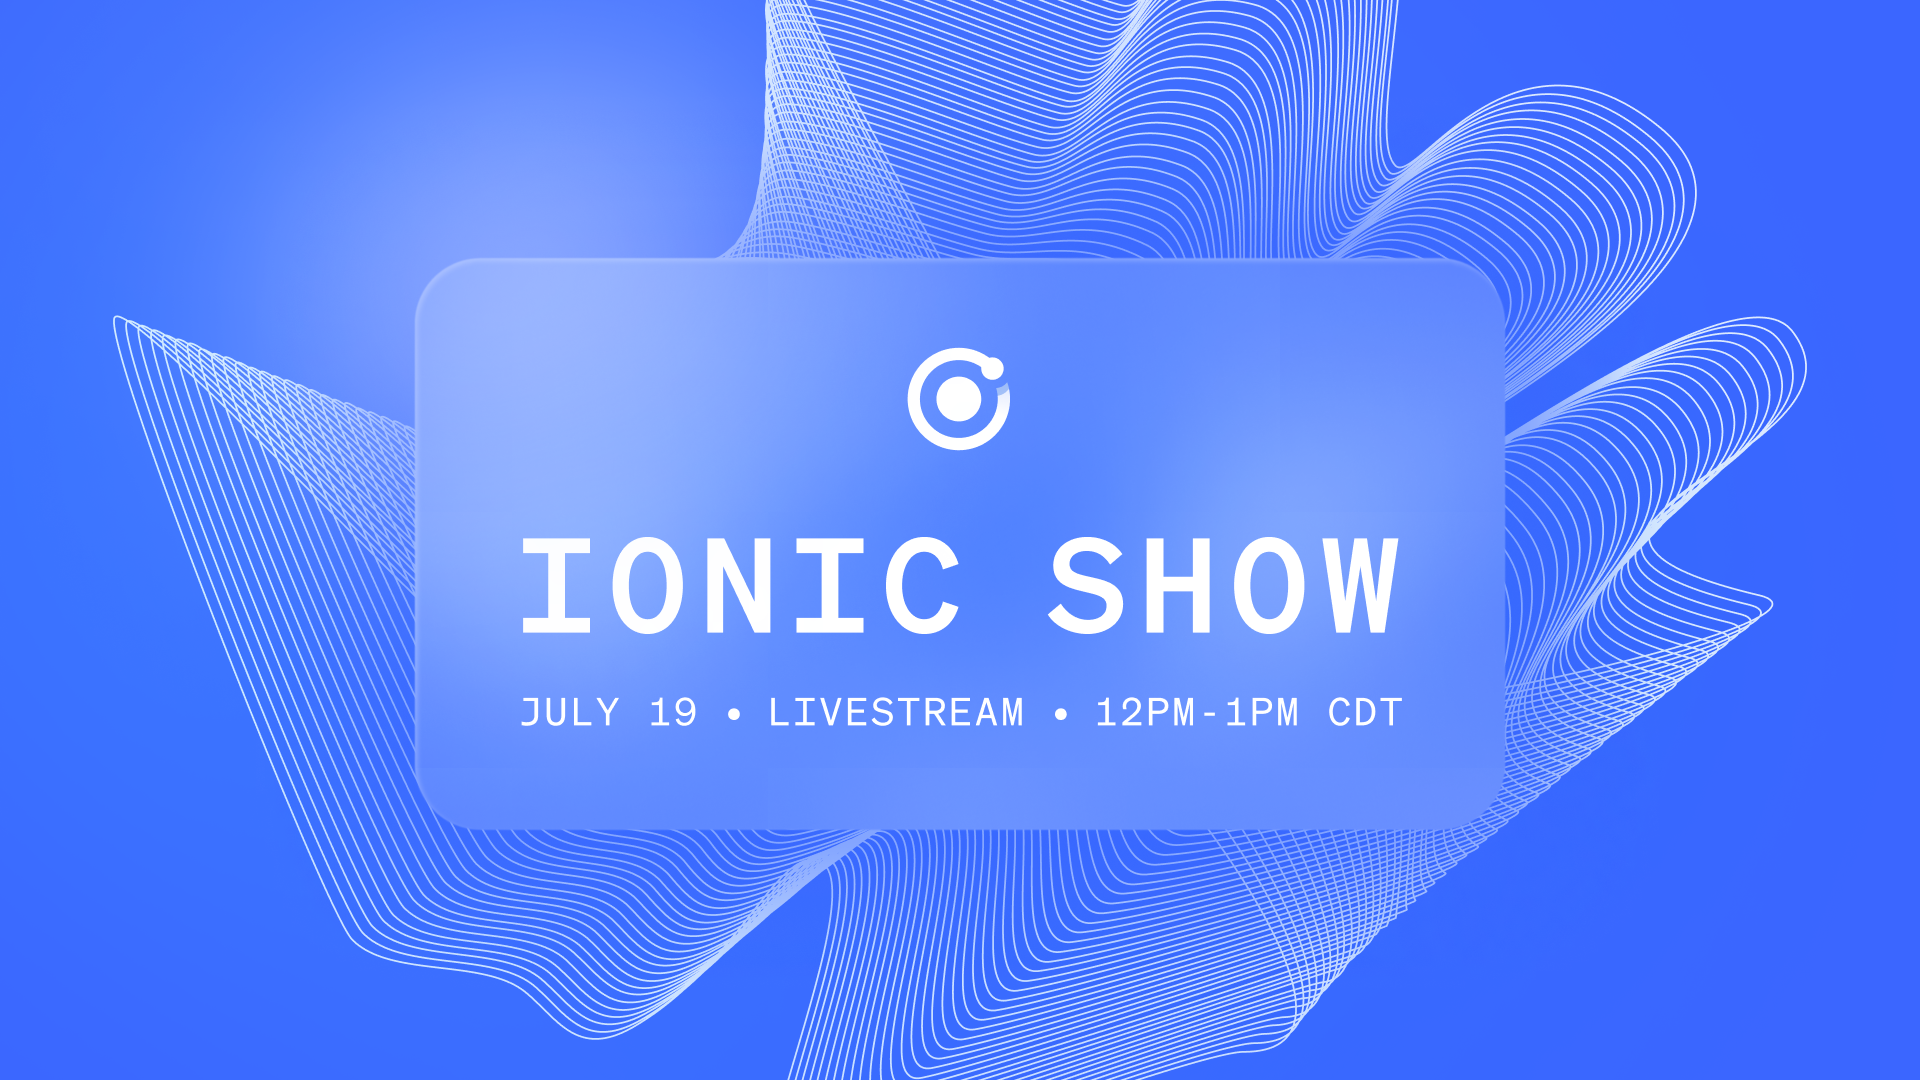 Ionic Show logo